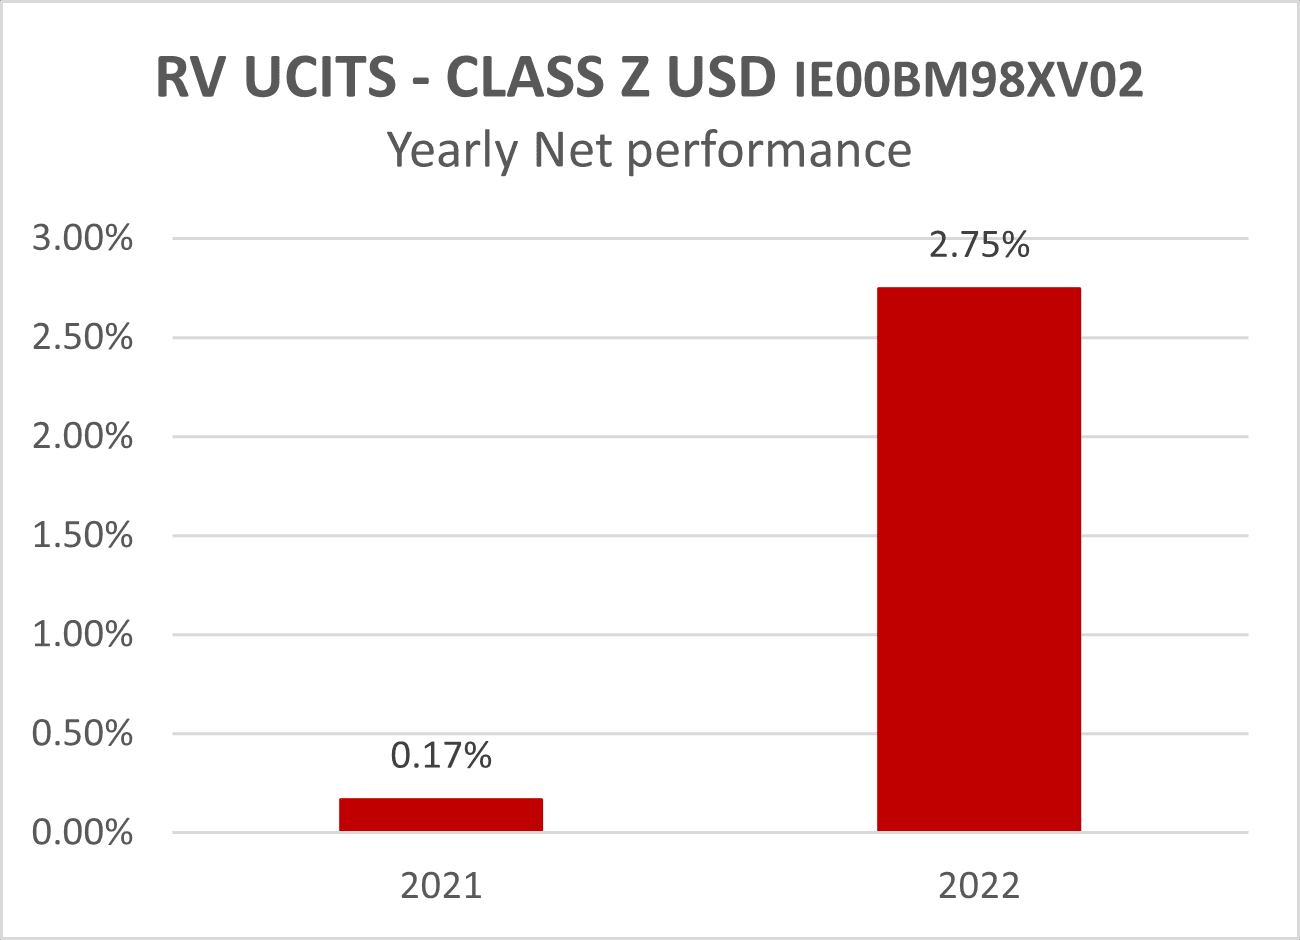 RV UCITS - CLASS Z USD IE00BM98XV02 - Yearly Net performance